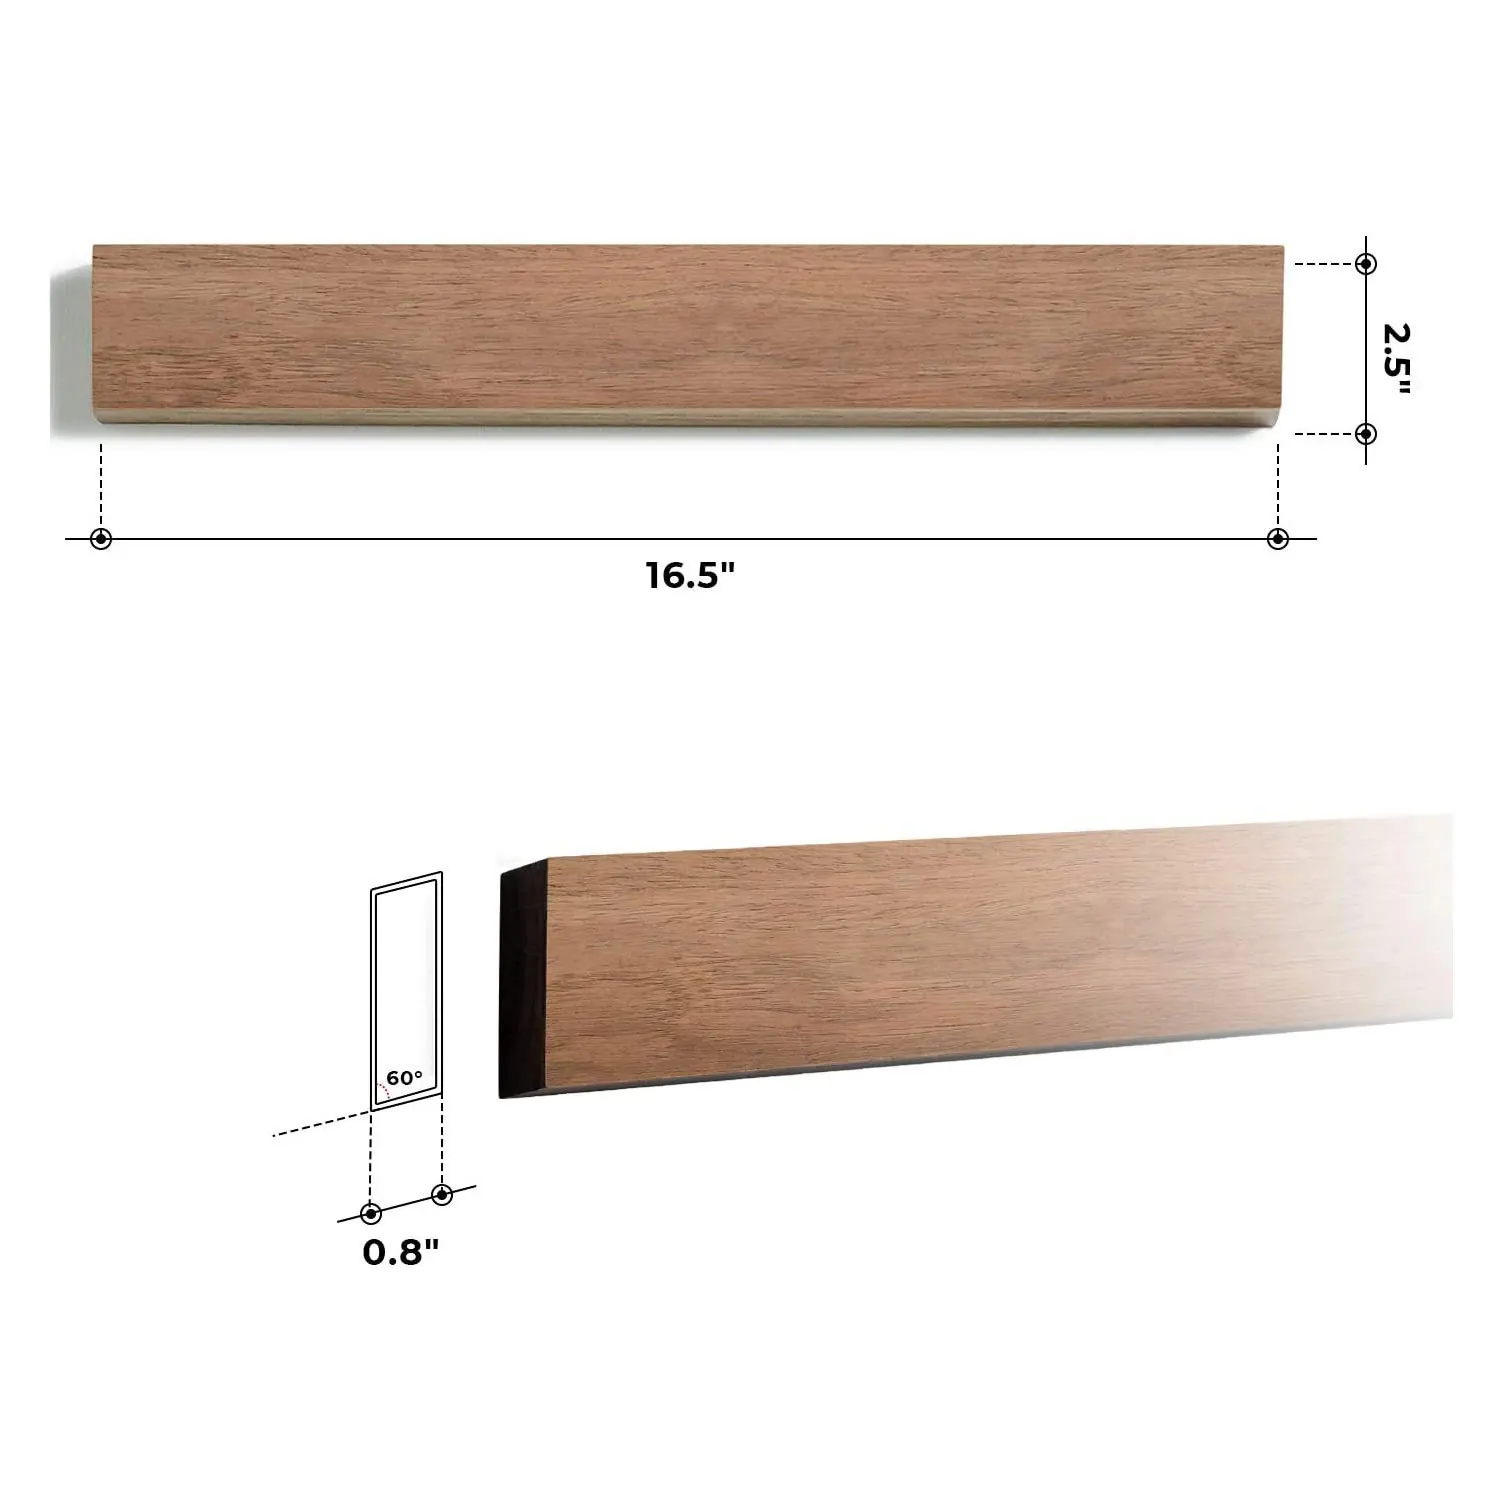 15.8 Inch Powerful Walnut Wood Magnet Knife Hanger Strip Magnetic Knife Holder For Wall